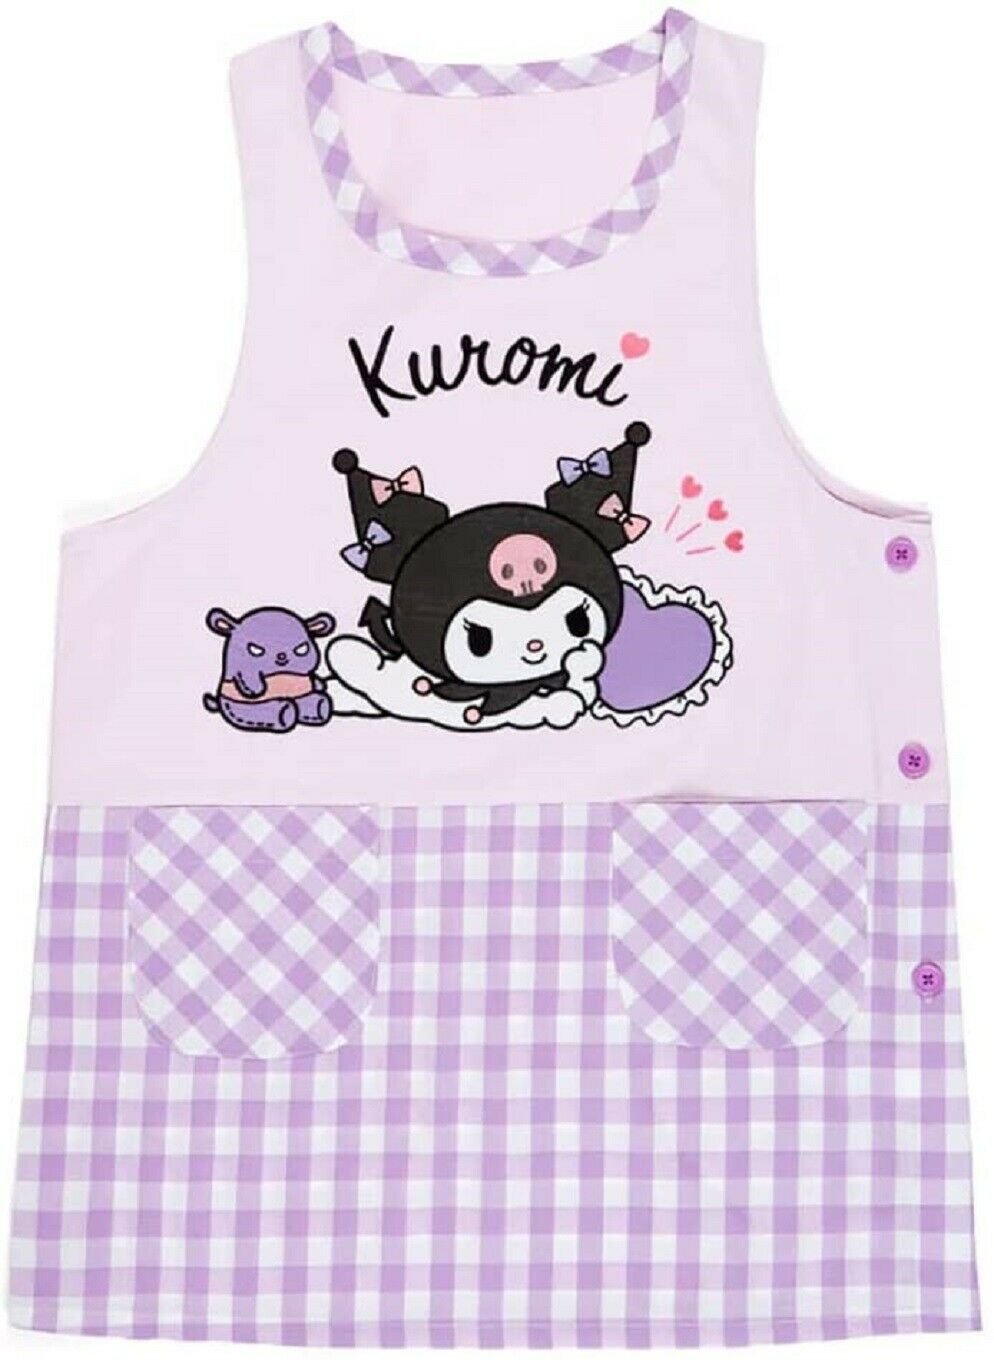 Sanrio Japan Kuromi Women Apron Tunic Type 2 Pockets for Cooking Kitchen Craft Gardening Purple Check Gift